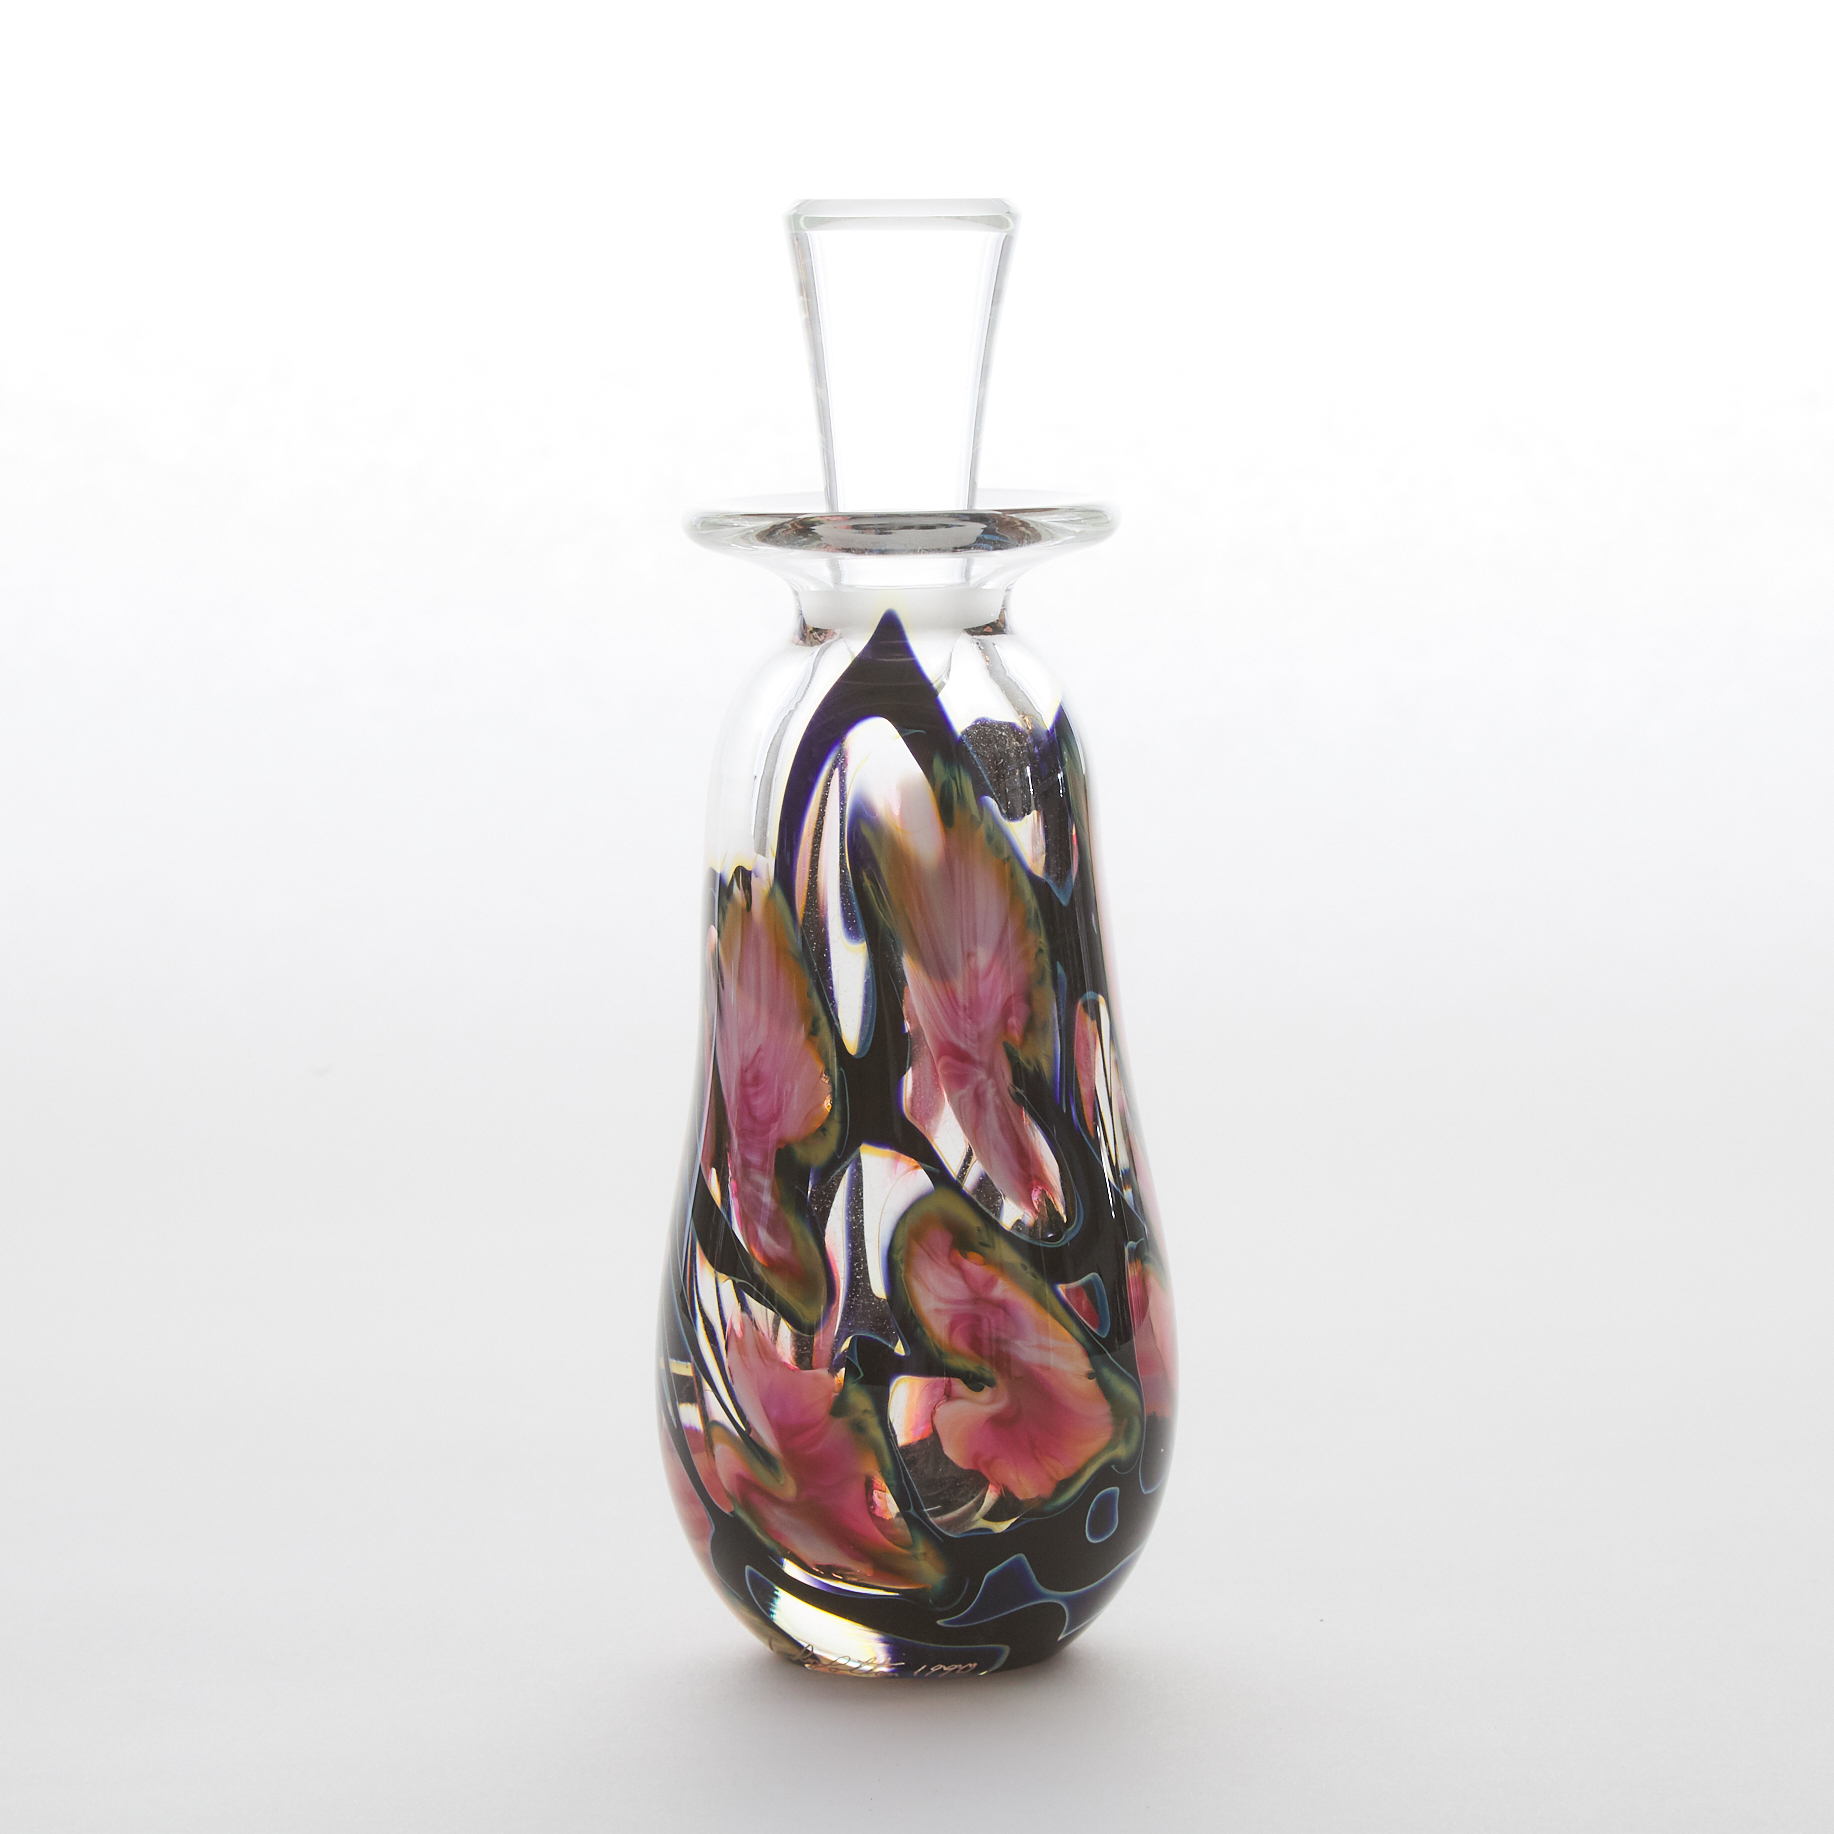 John Lotton (American, b.1964), Internally Decorated Glass Bottle and Stopper, 1990